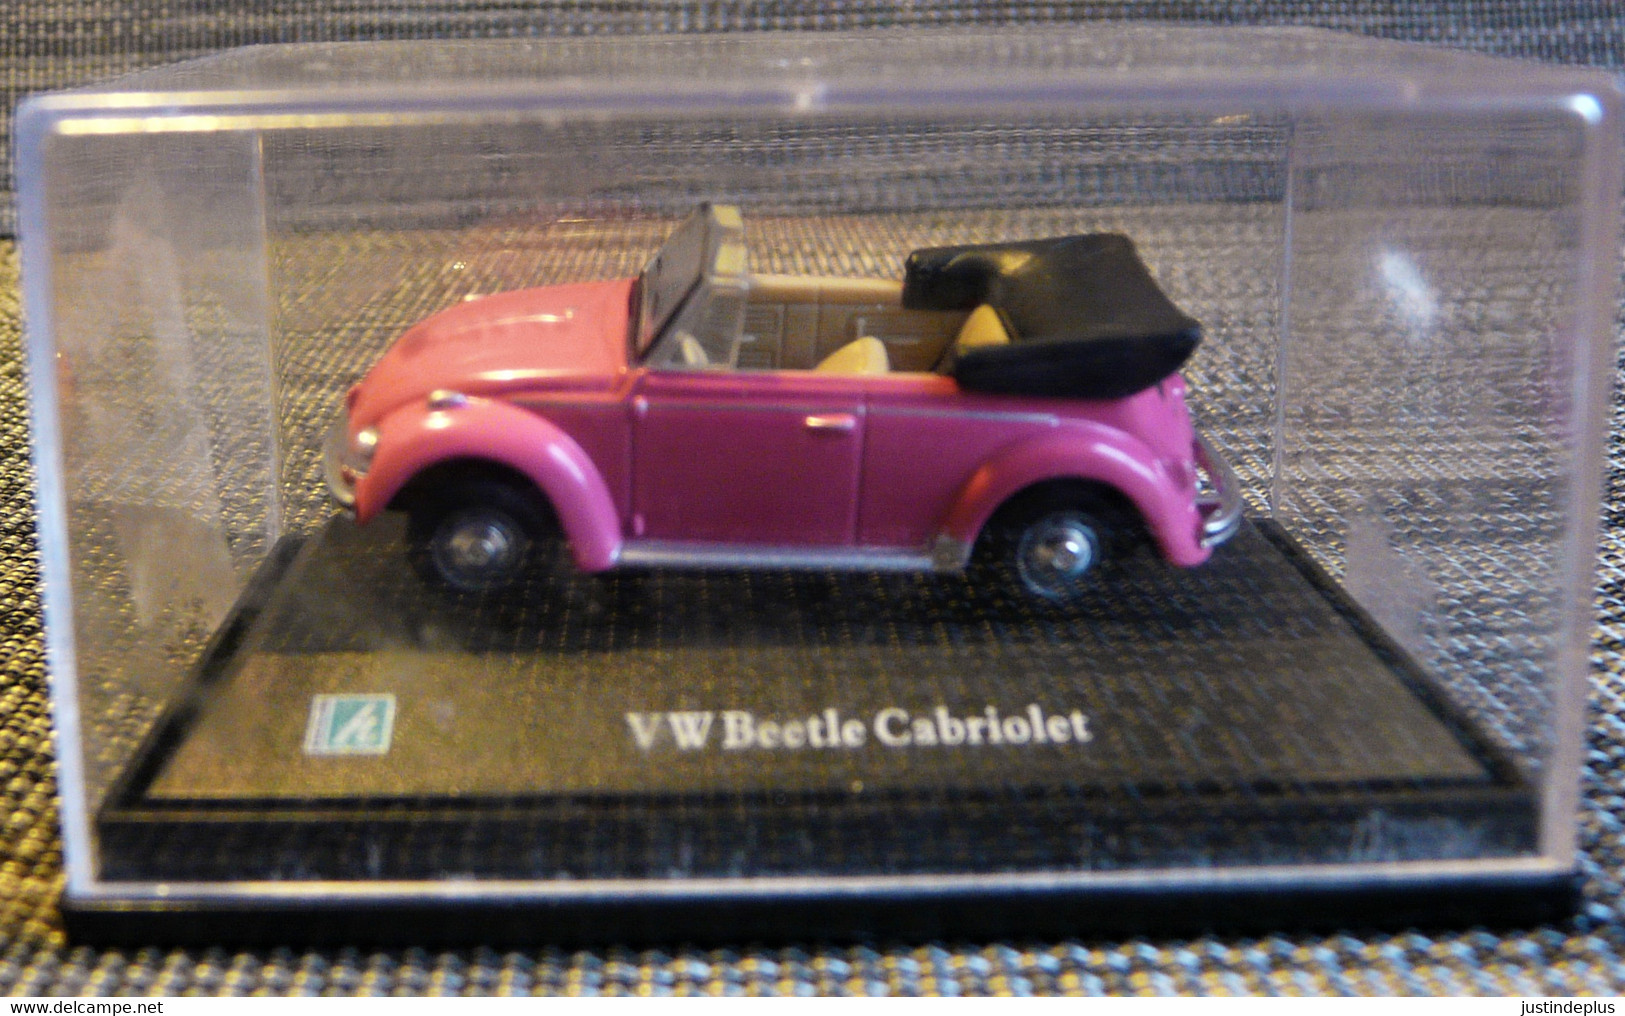 VW BEETLE CABRIOLET ROSE WOLKSVAGEN COCCINELLE ECHELLE 1/72EME - Scala 1:72